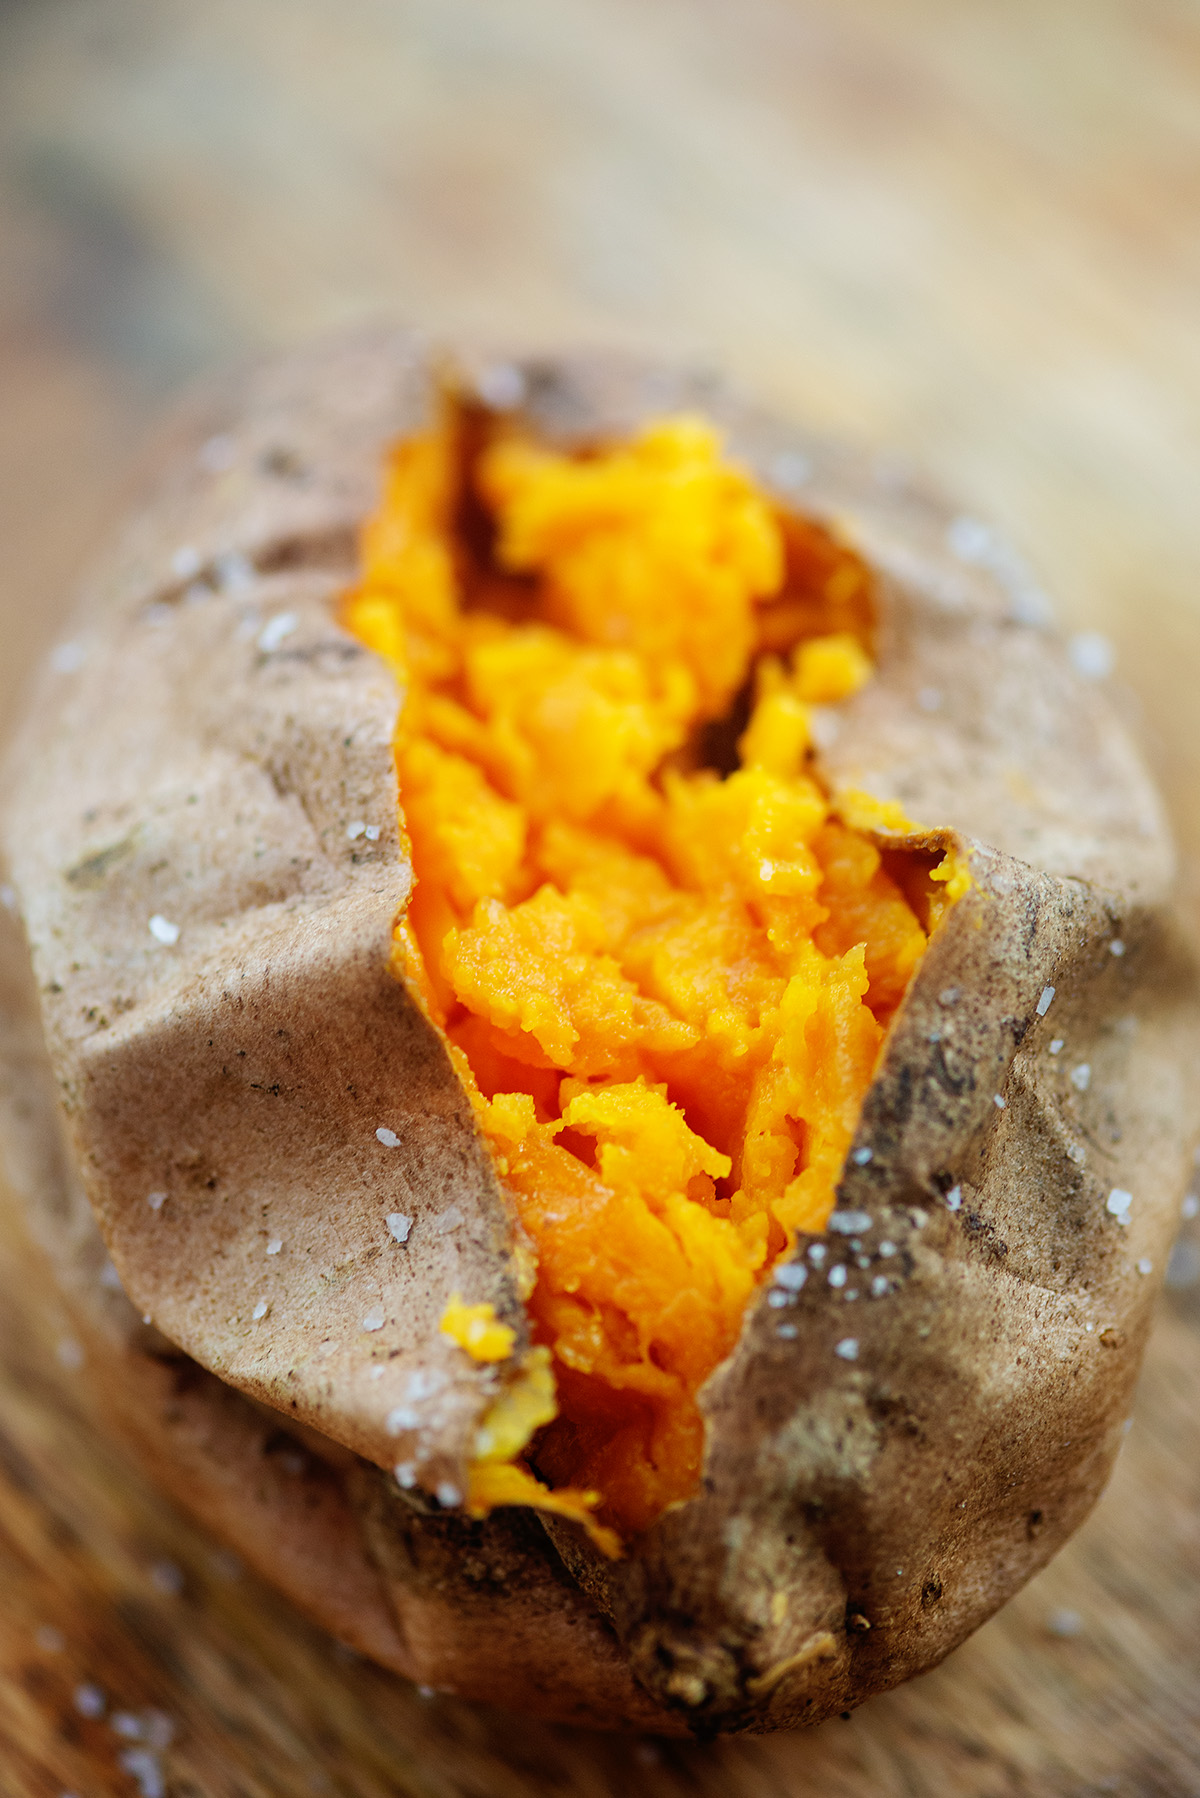 A close up of a split open sweet potato.